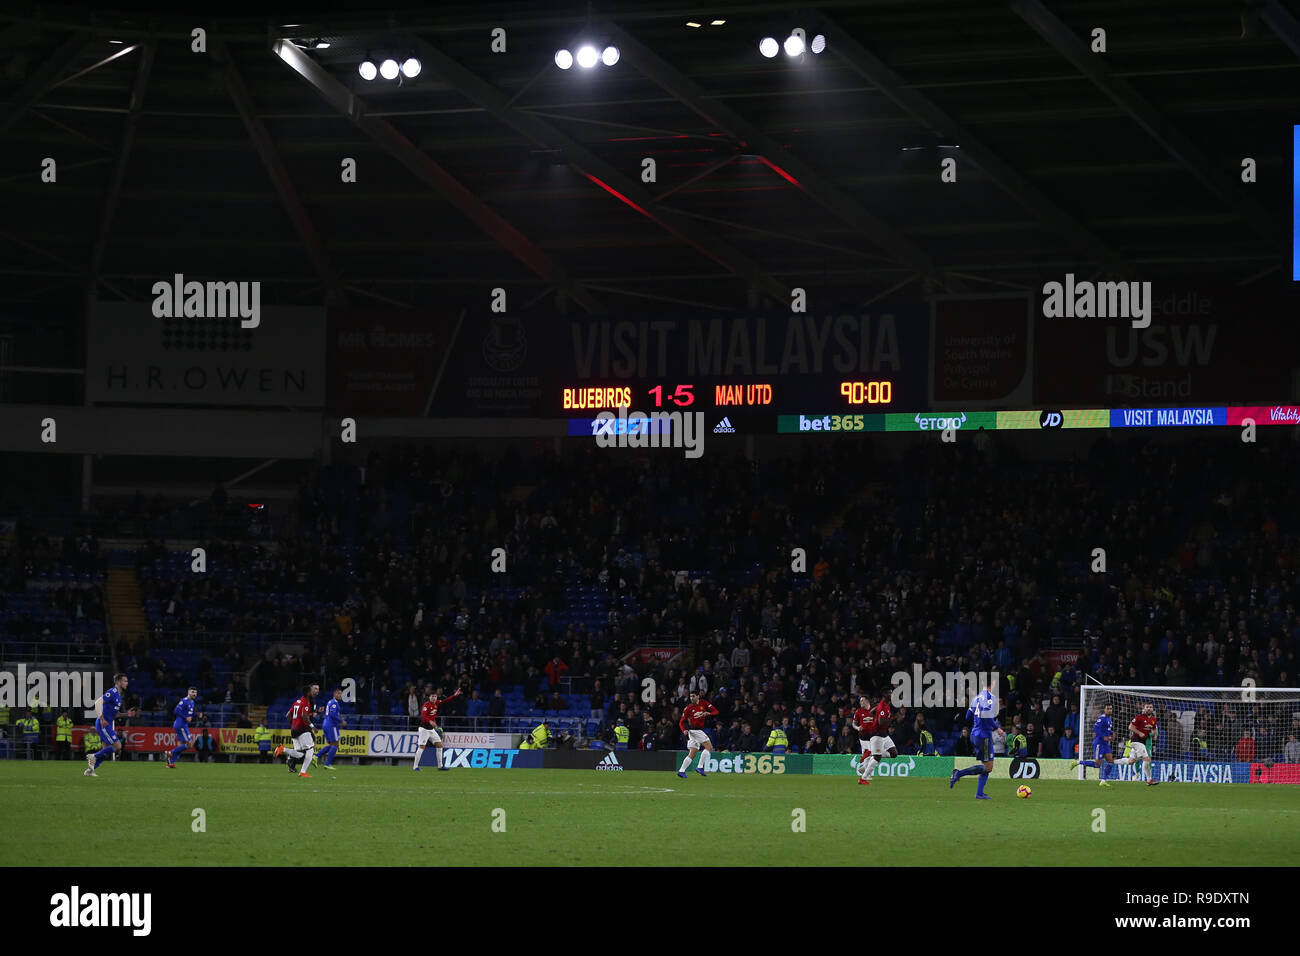 Cardiff City vs Birmingham City LIVE: Championship result, final